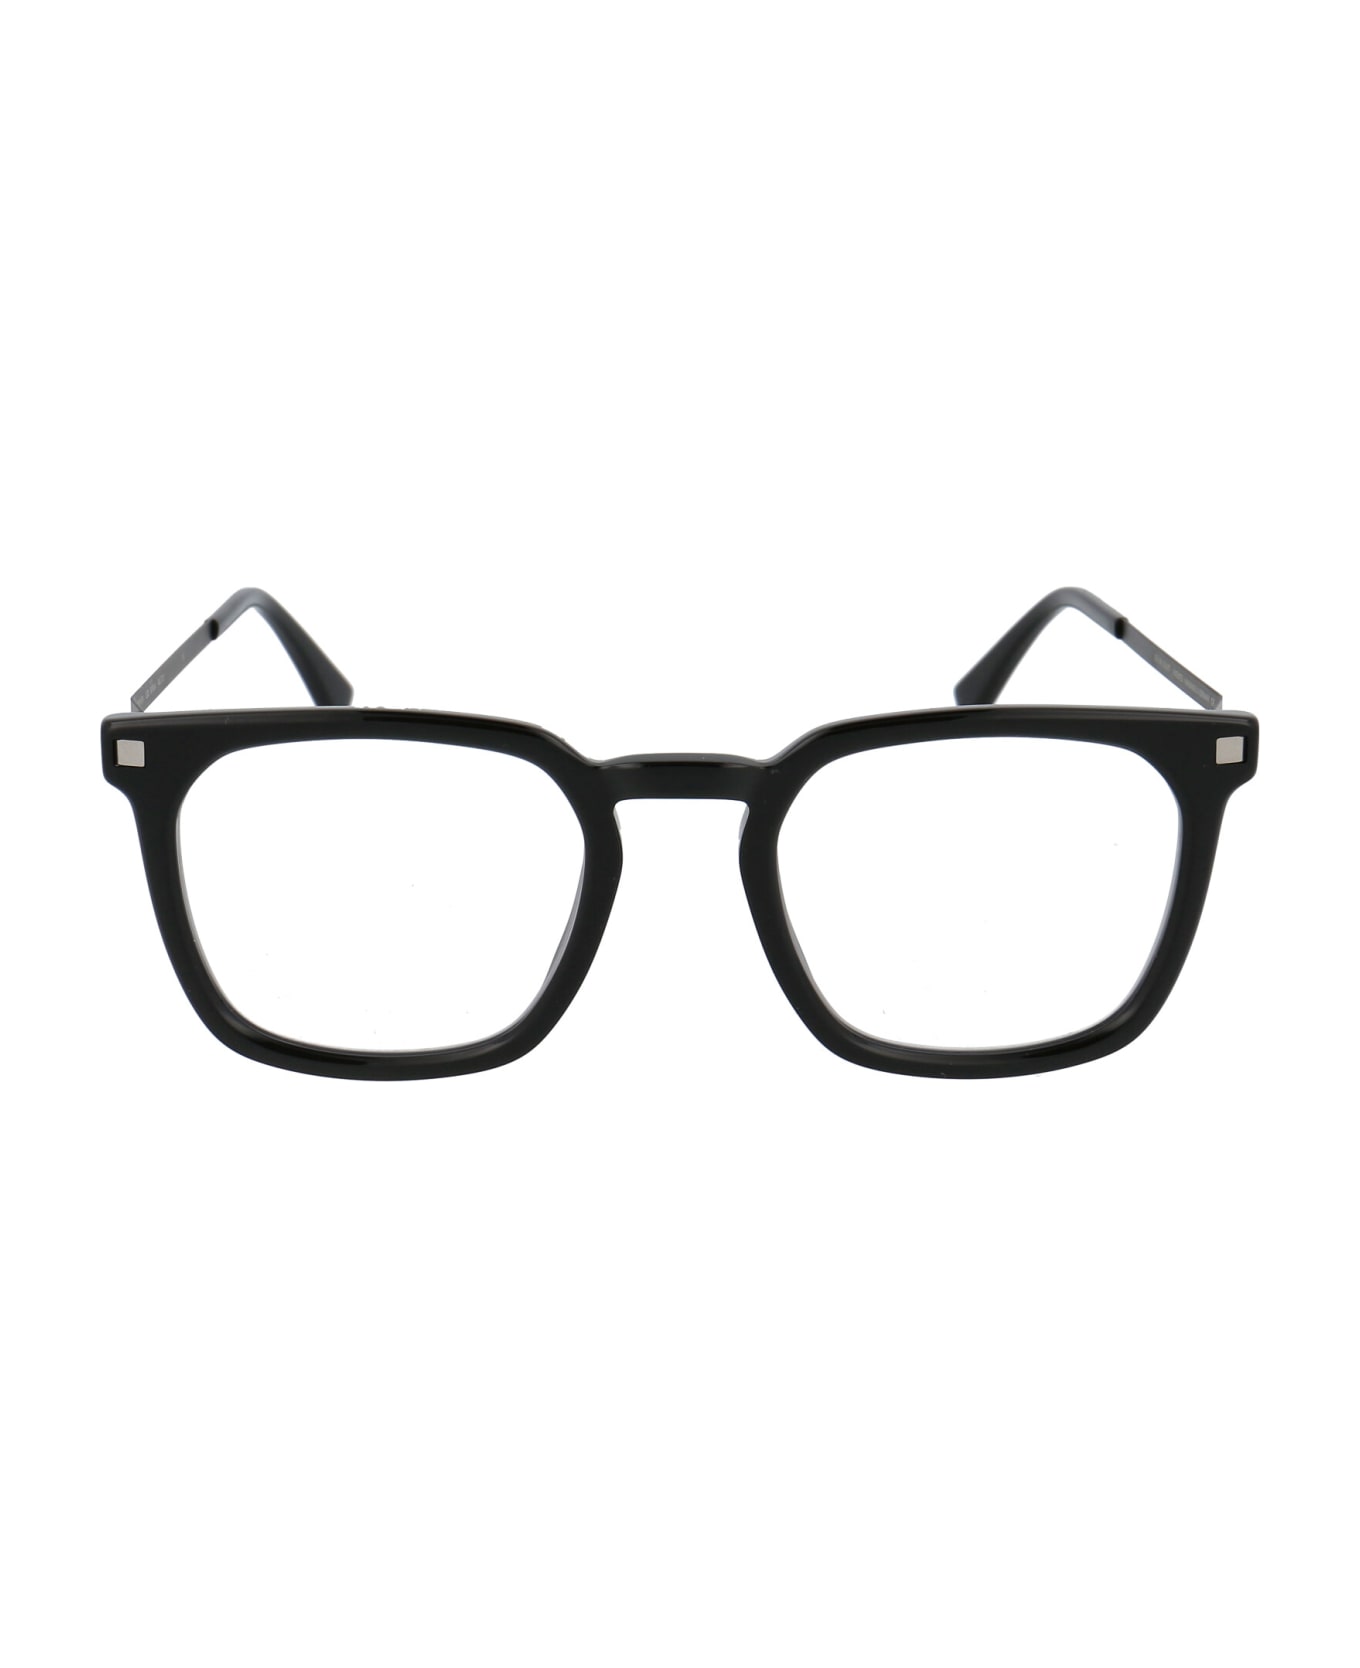 Mykita Borga Glasses - 877 C95 Black/Silver/Black Clear